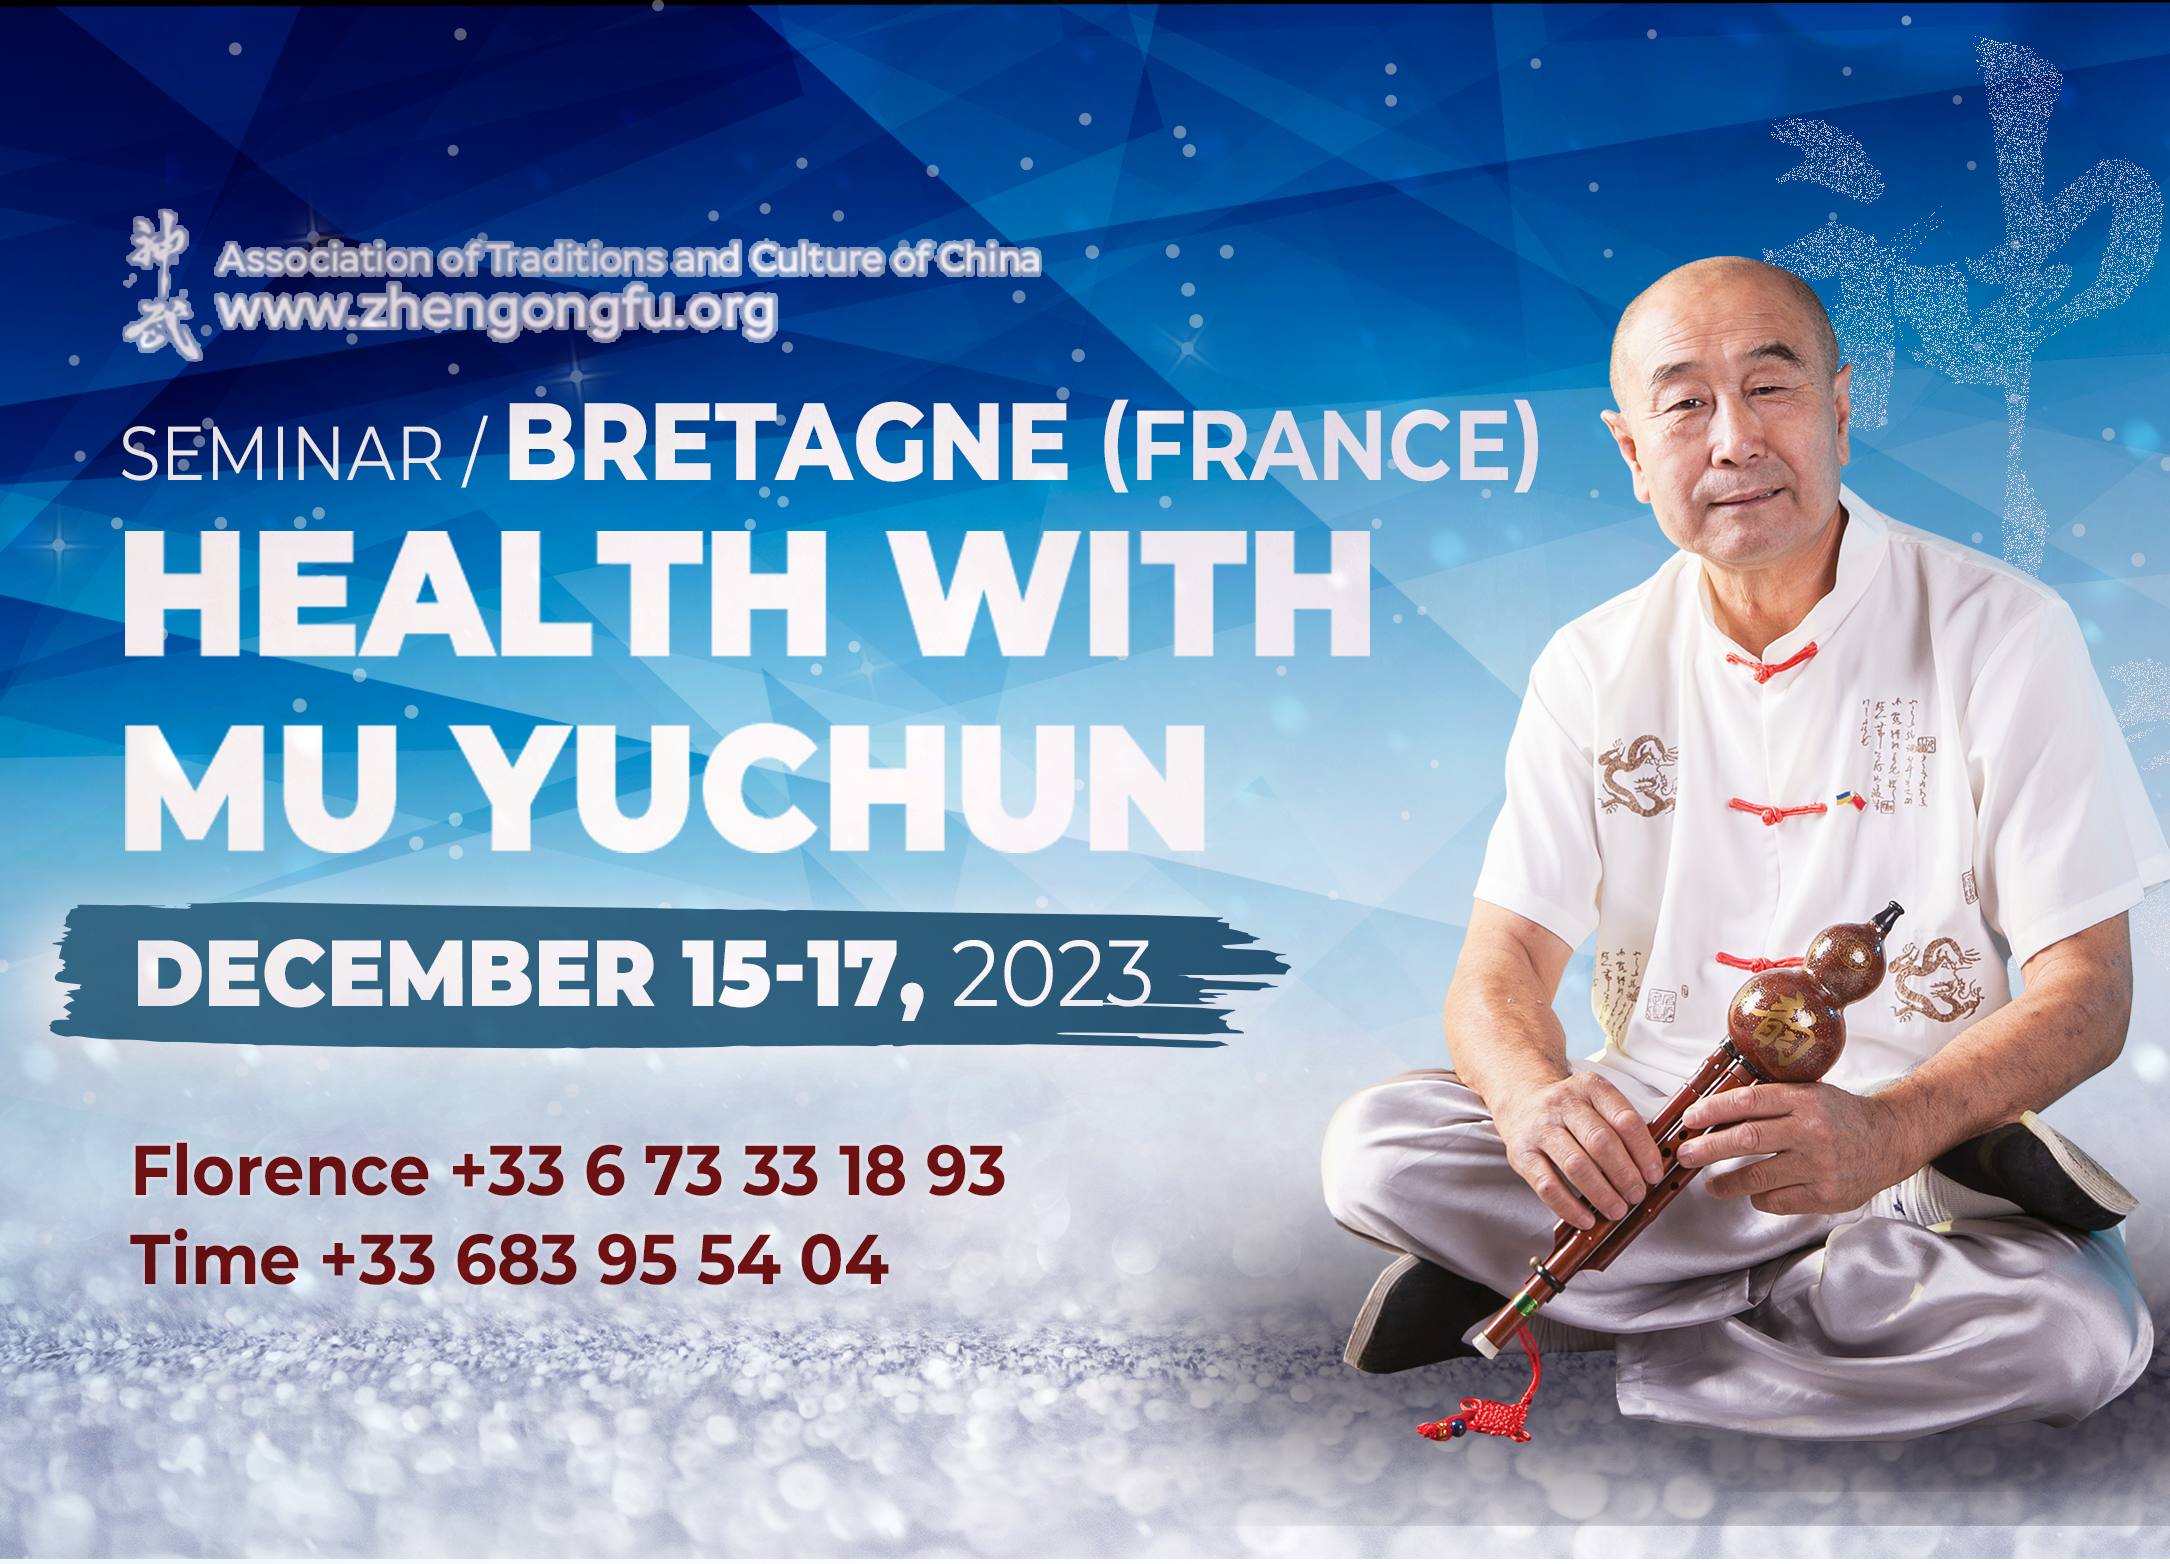 Bretagne, France, Sеminar, Health, Master Mu Yuchun, December, 2023.